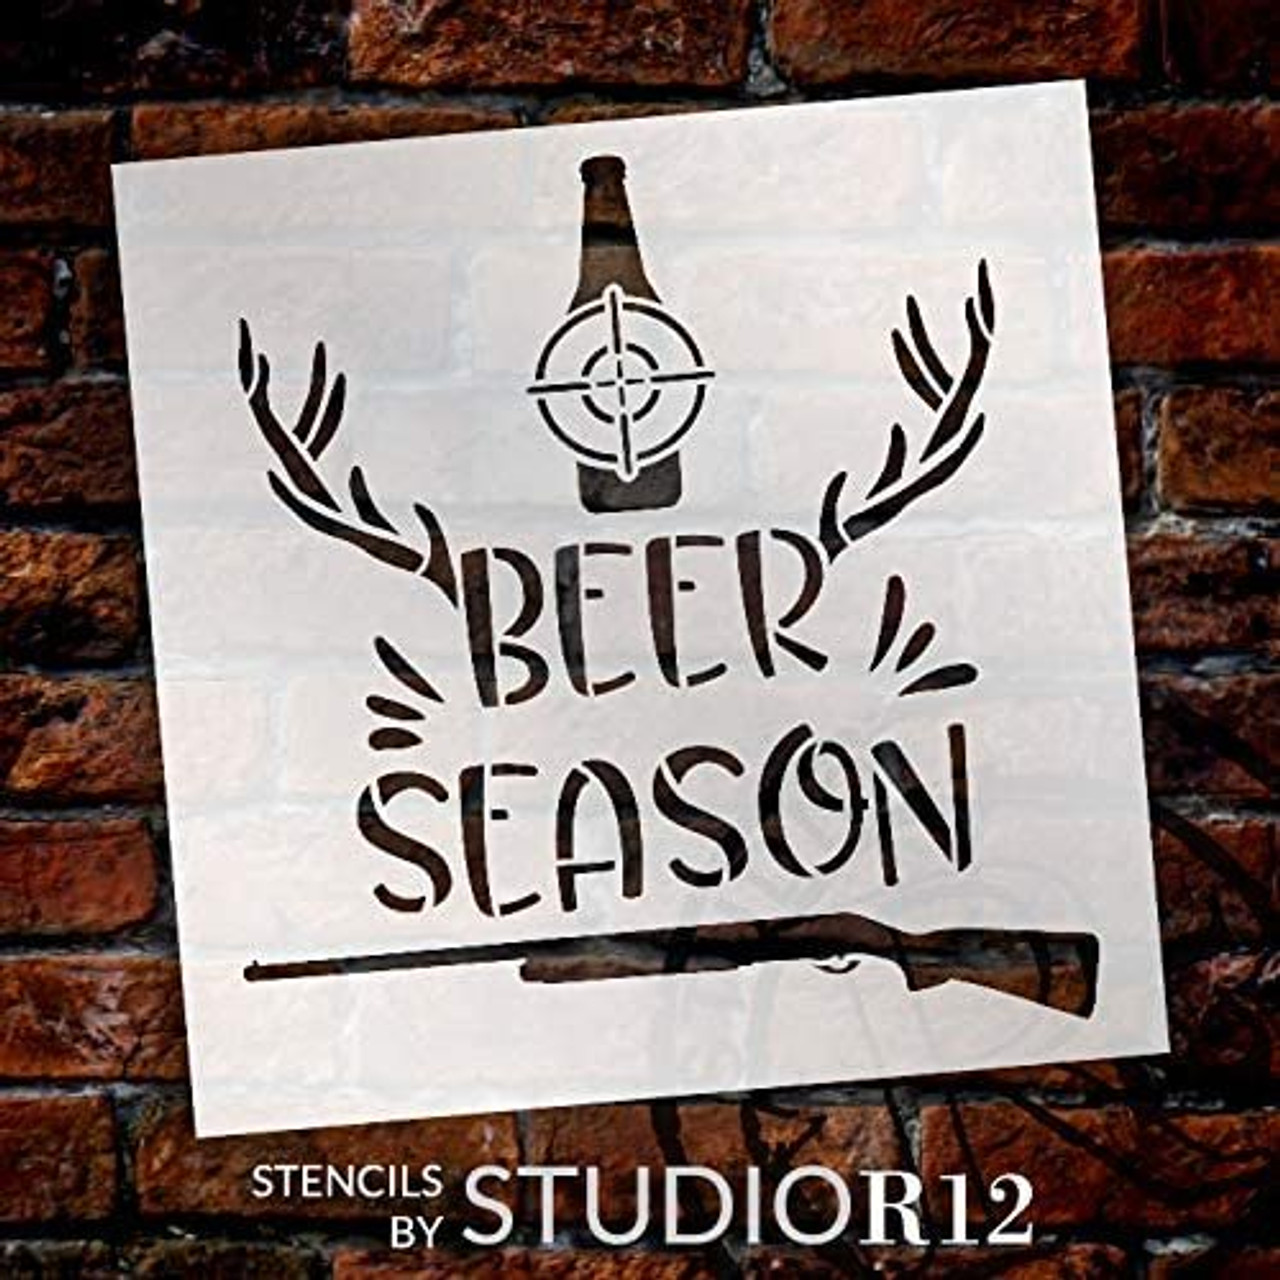 Beer Season Stencil by StudioR12 | DIY Hunting Deer Antler Shotgun Home Decor Gift | Craft Paint Wood Sign Reusable Mylar Template | Select Size